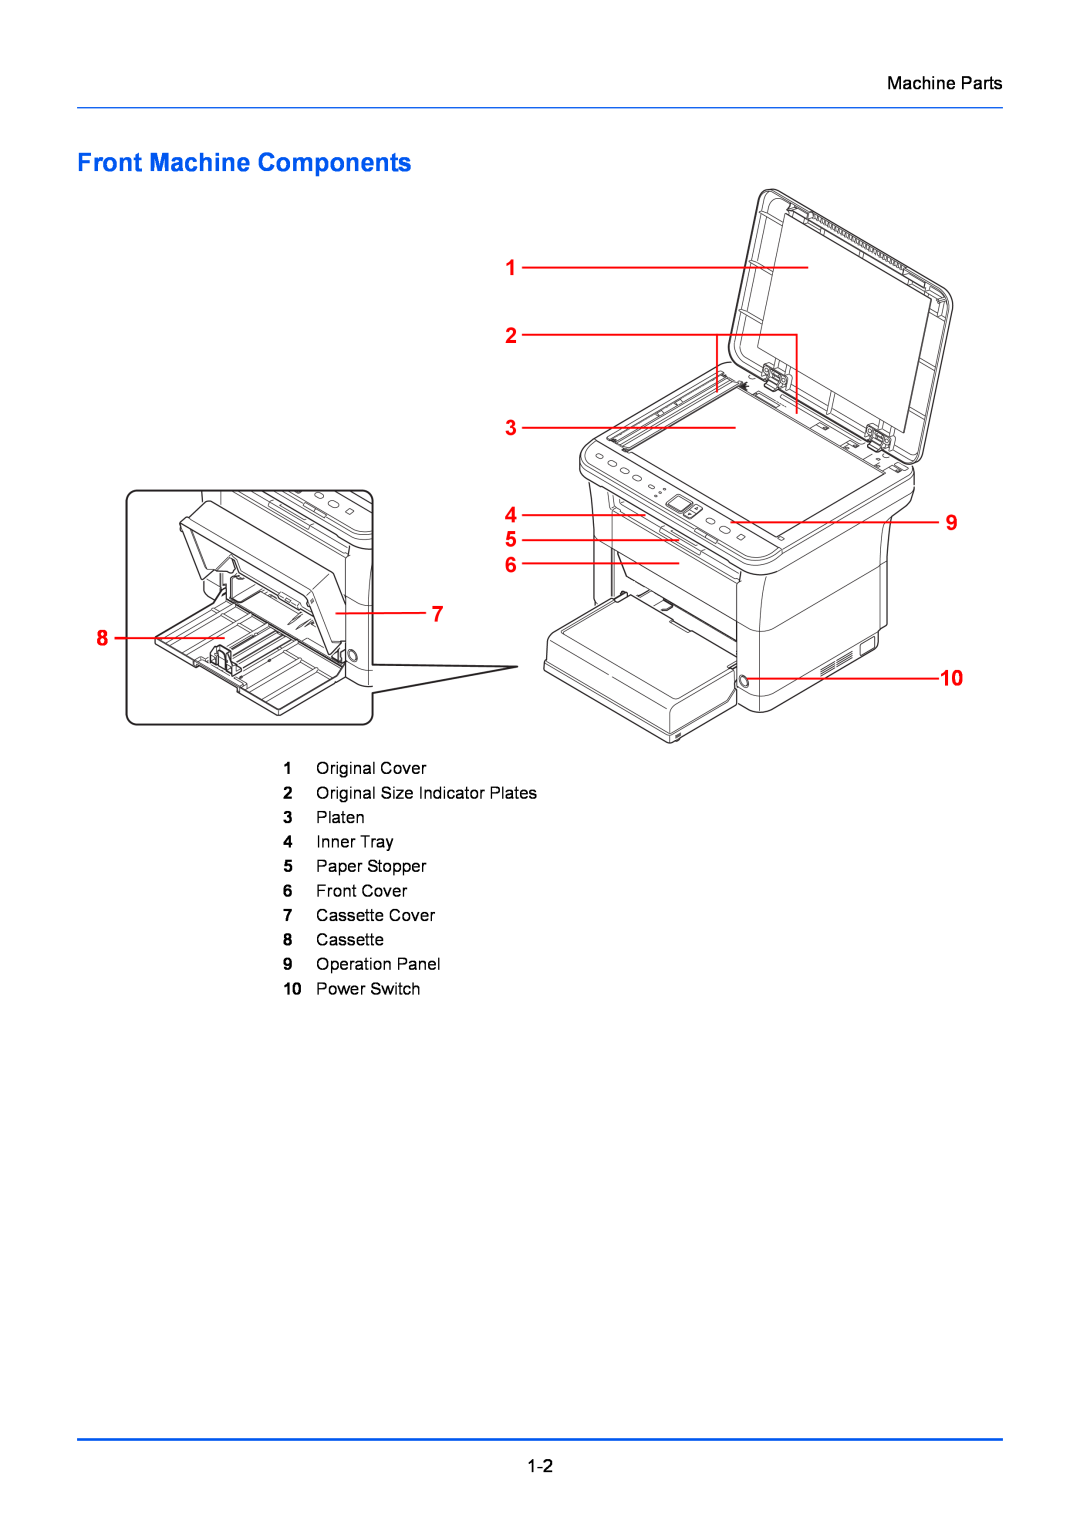 Kyocera FS-1020MFP manual Front Machine Components, Original Cover 2 Original Size Indicator Plates 3 Platen, Machine Parts 